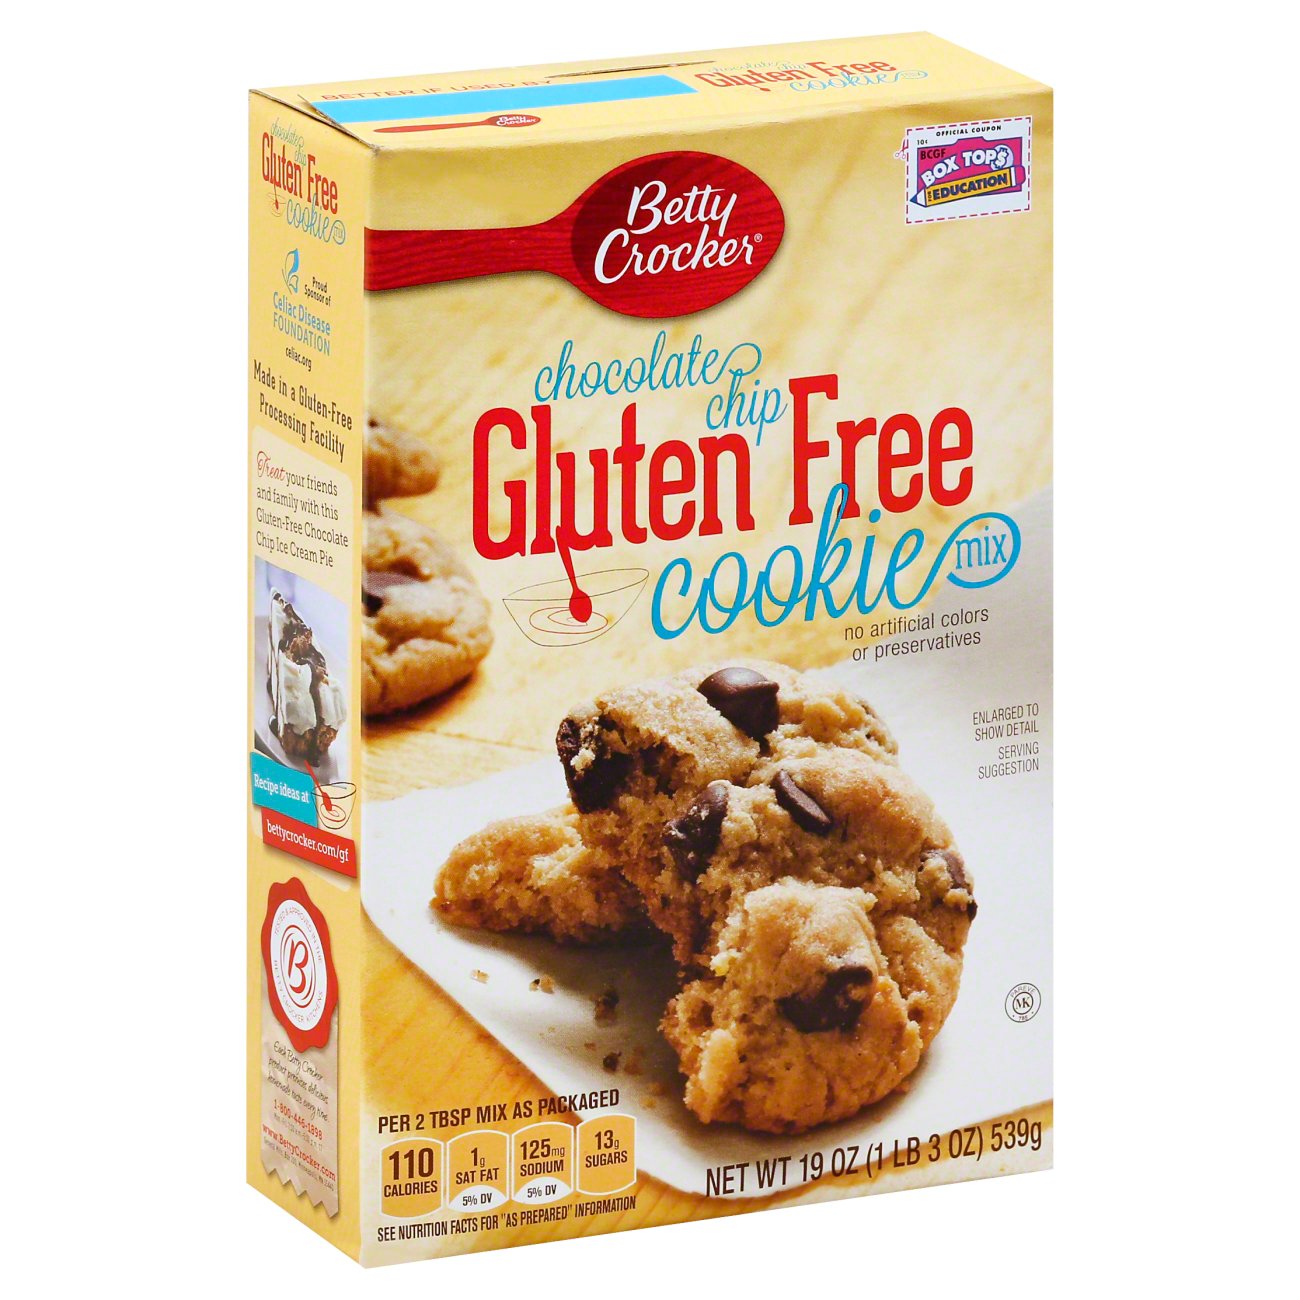 Crocker Gluten Free Chocolate Cookie Mix - Baking Mixes at H-E-B